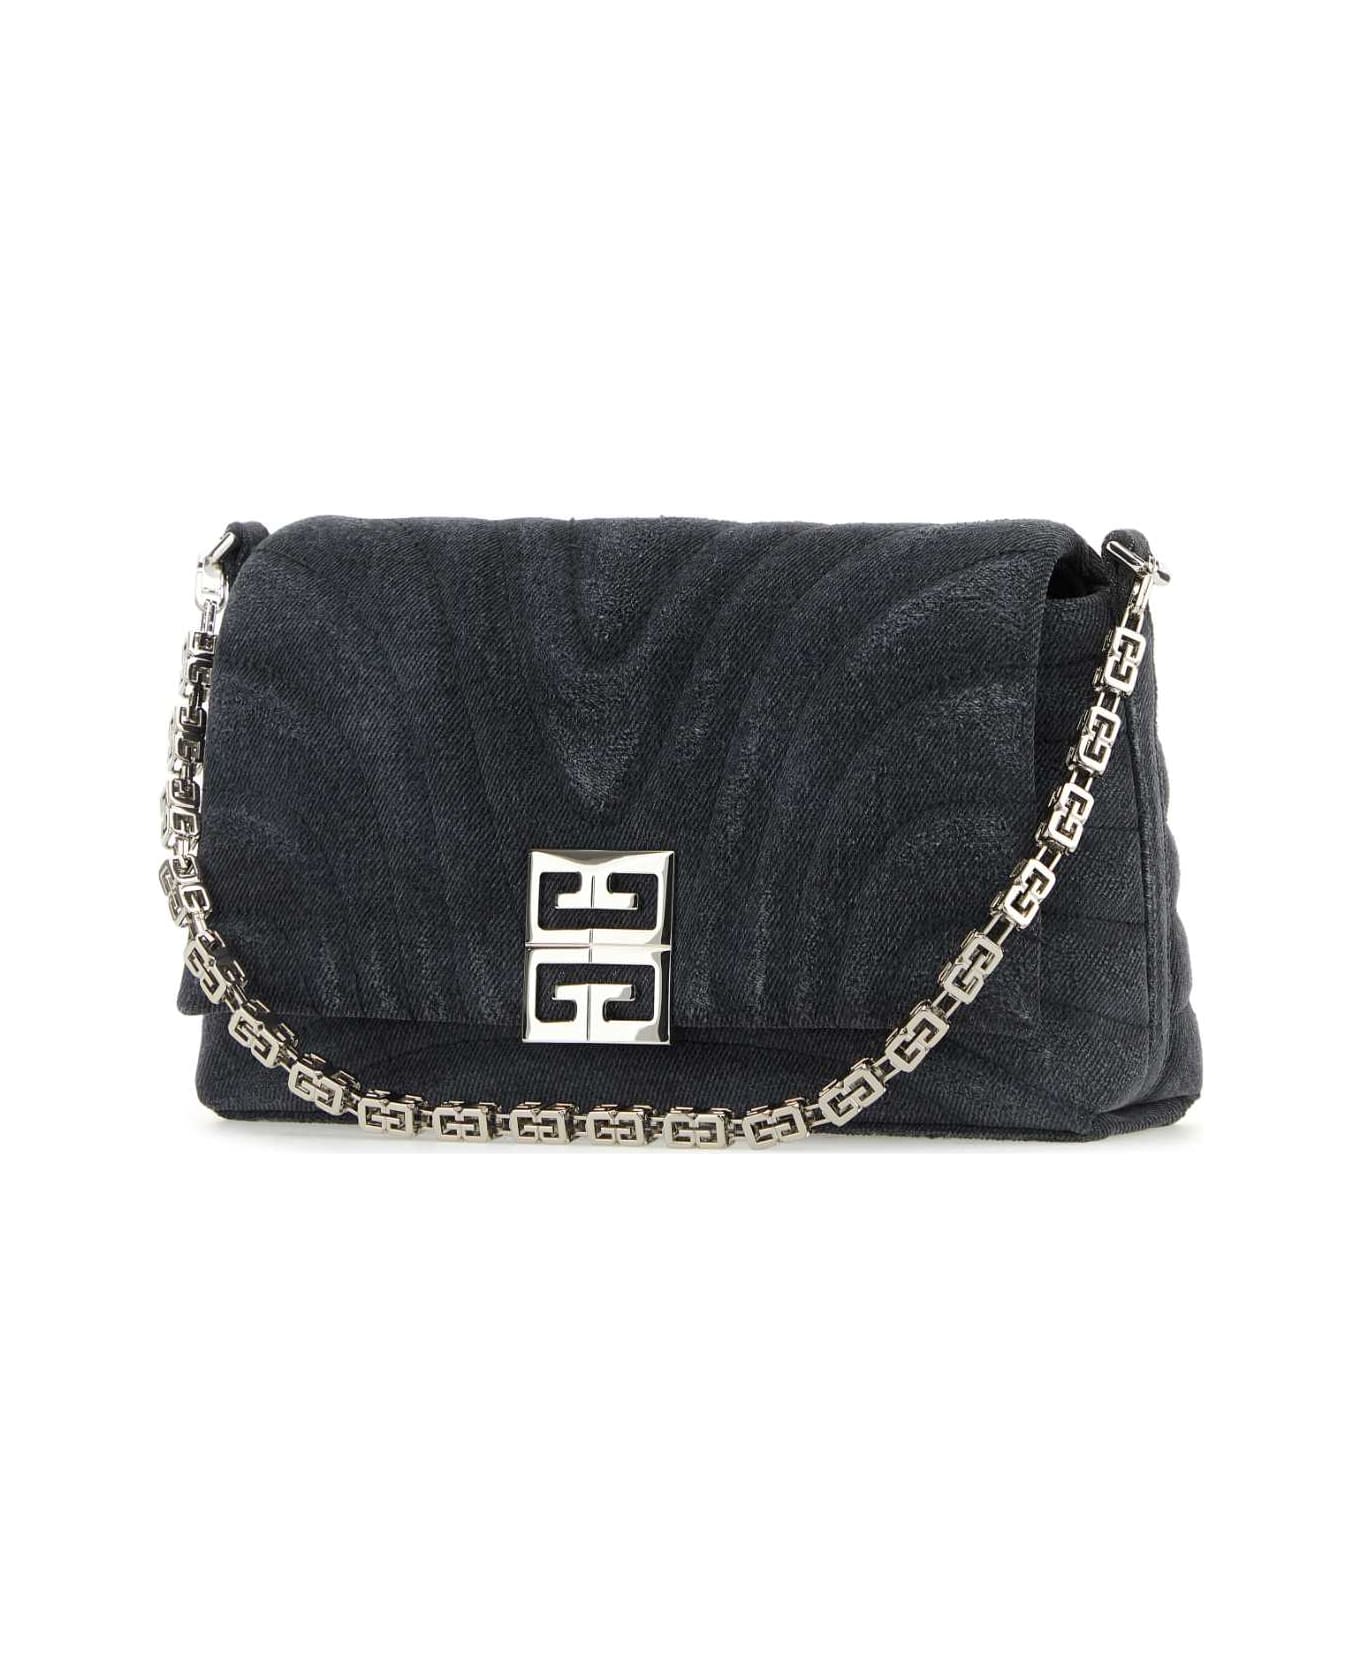 Givenchy Black Denim Medium 4g Soft Handbag - BLACK